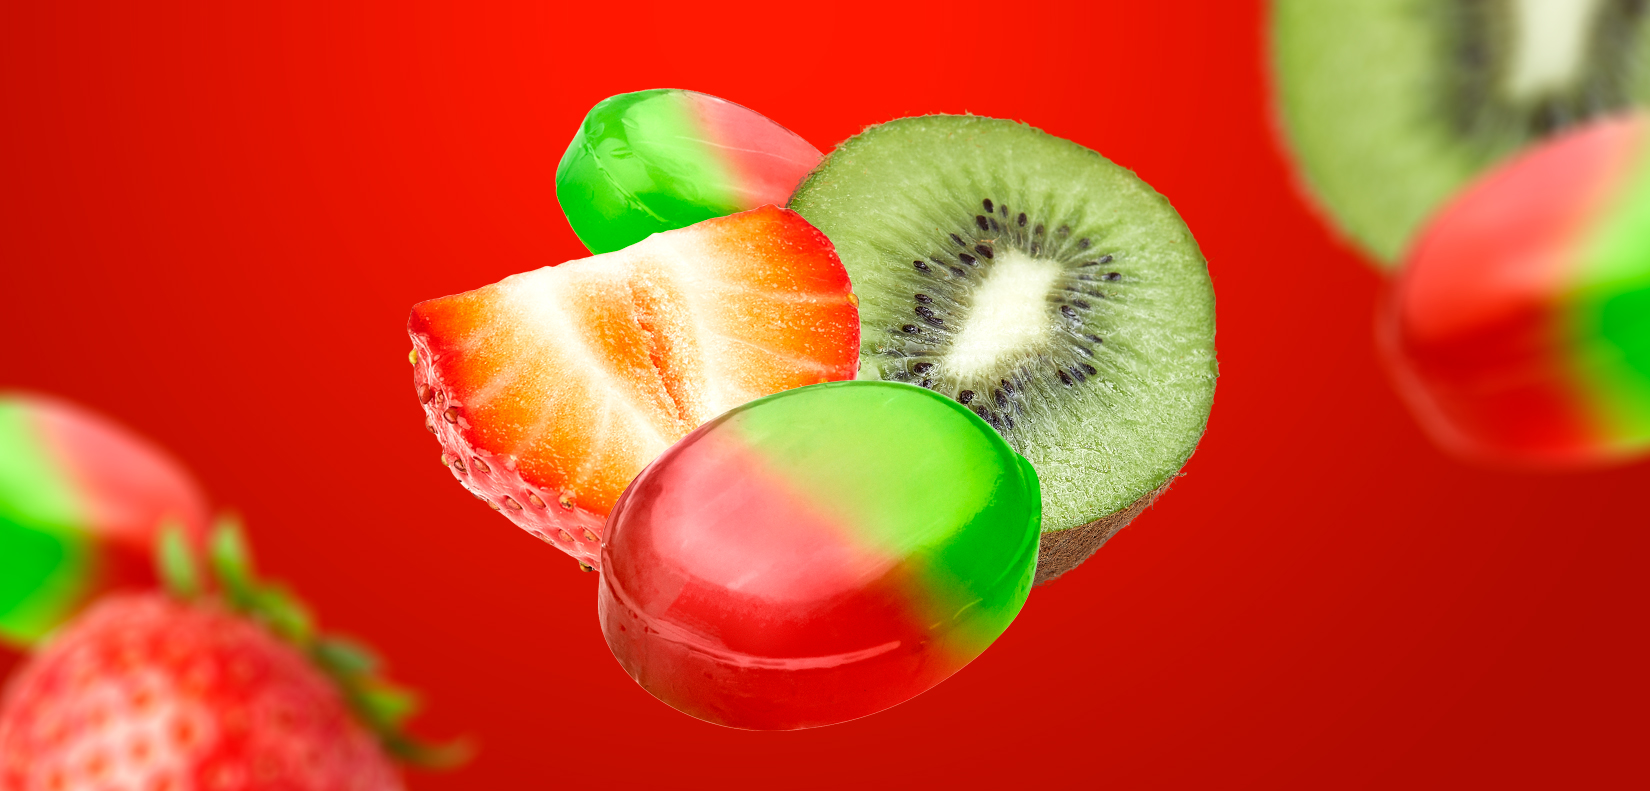 ASM® Erdbeer Kiwi Drops Aroma Pairing 991120